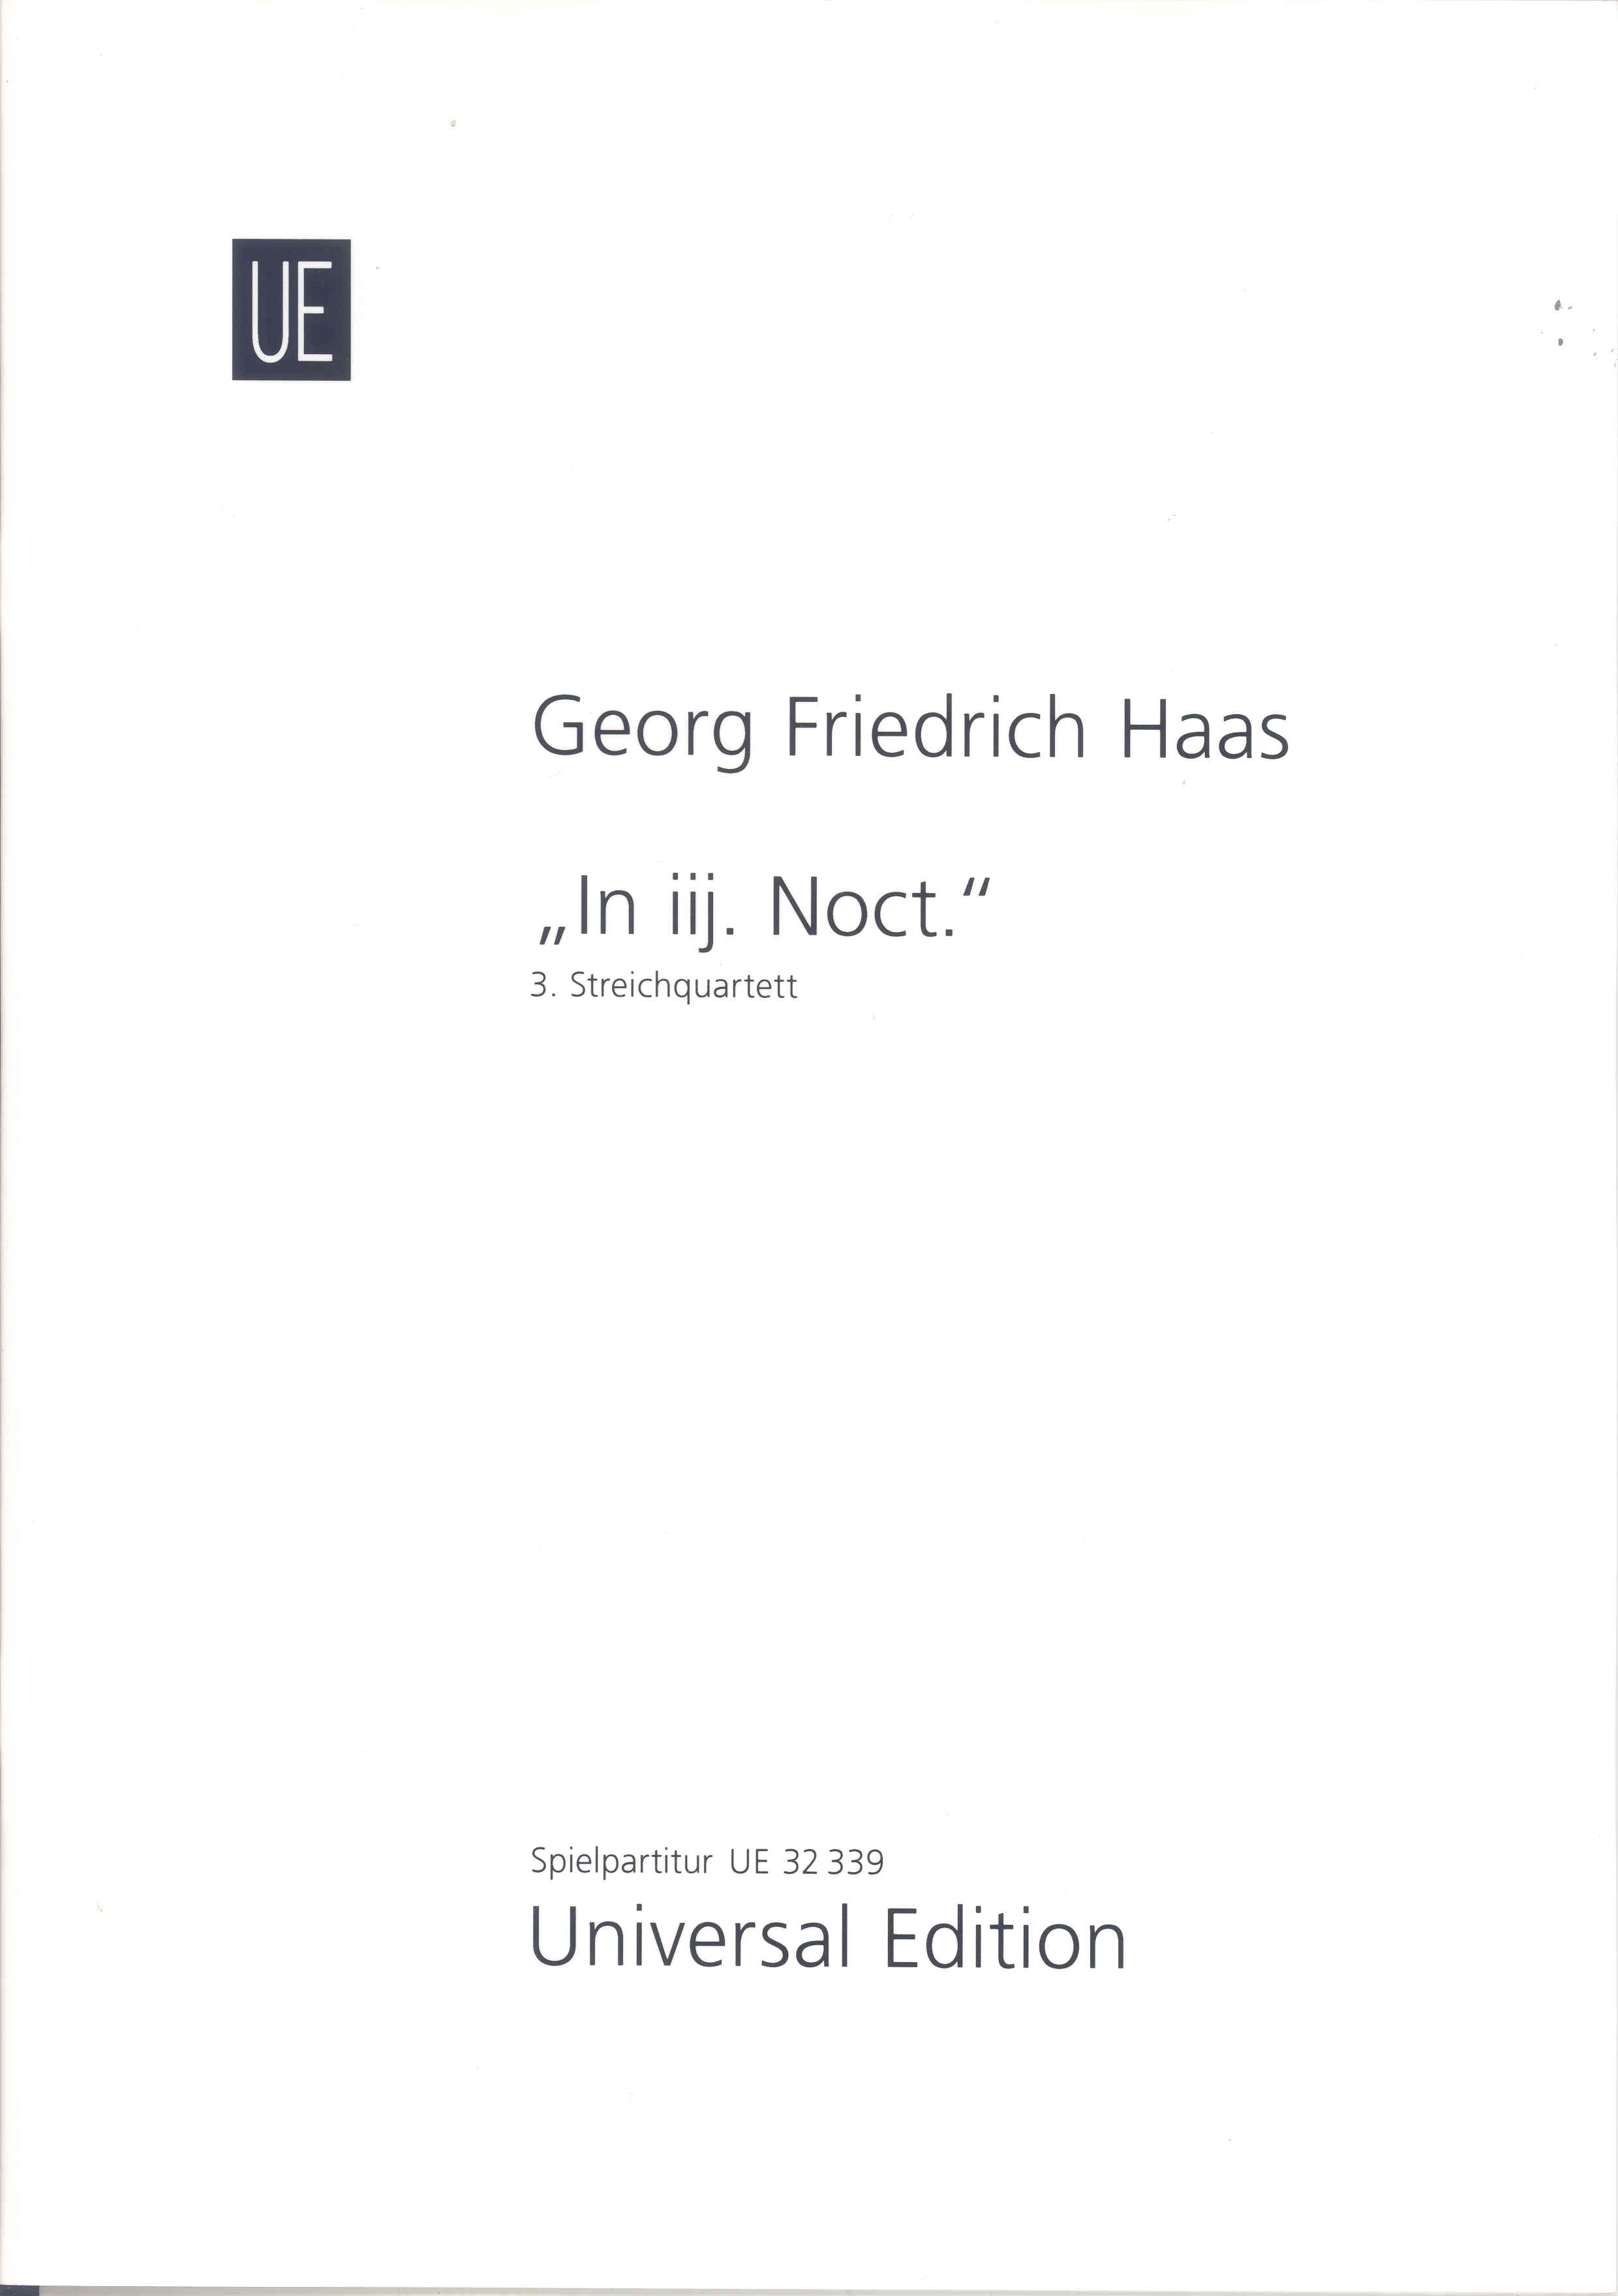 Haas String Quartet No 3 In Iij. Noct. Perf Score Sheet Music Songbook